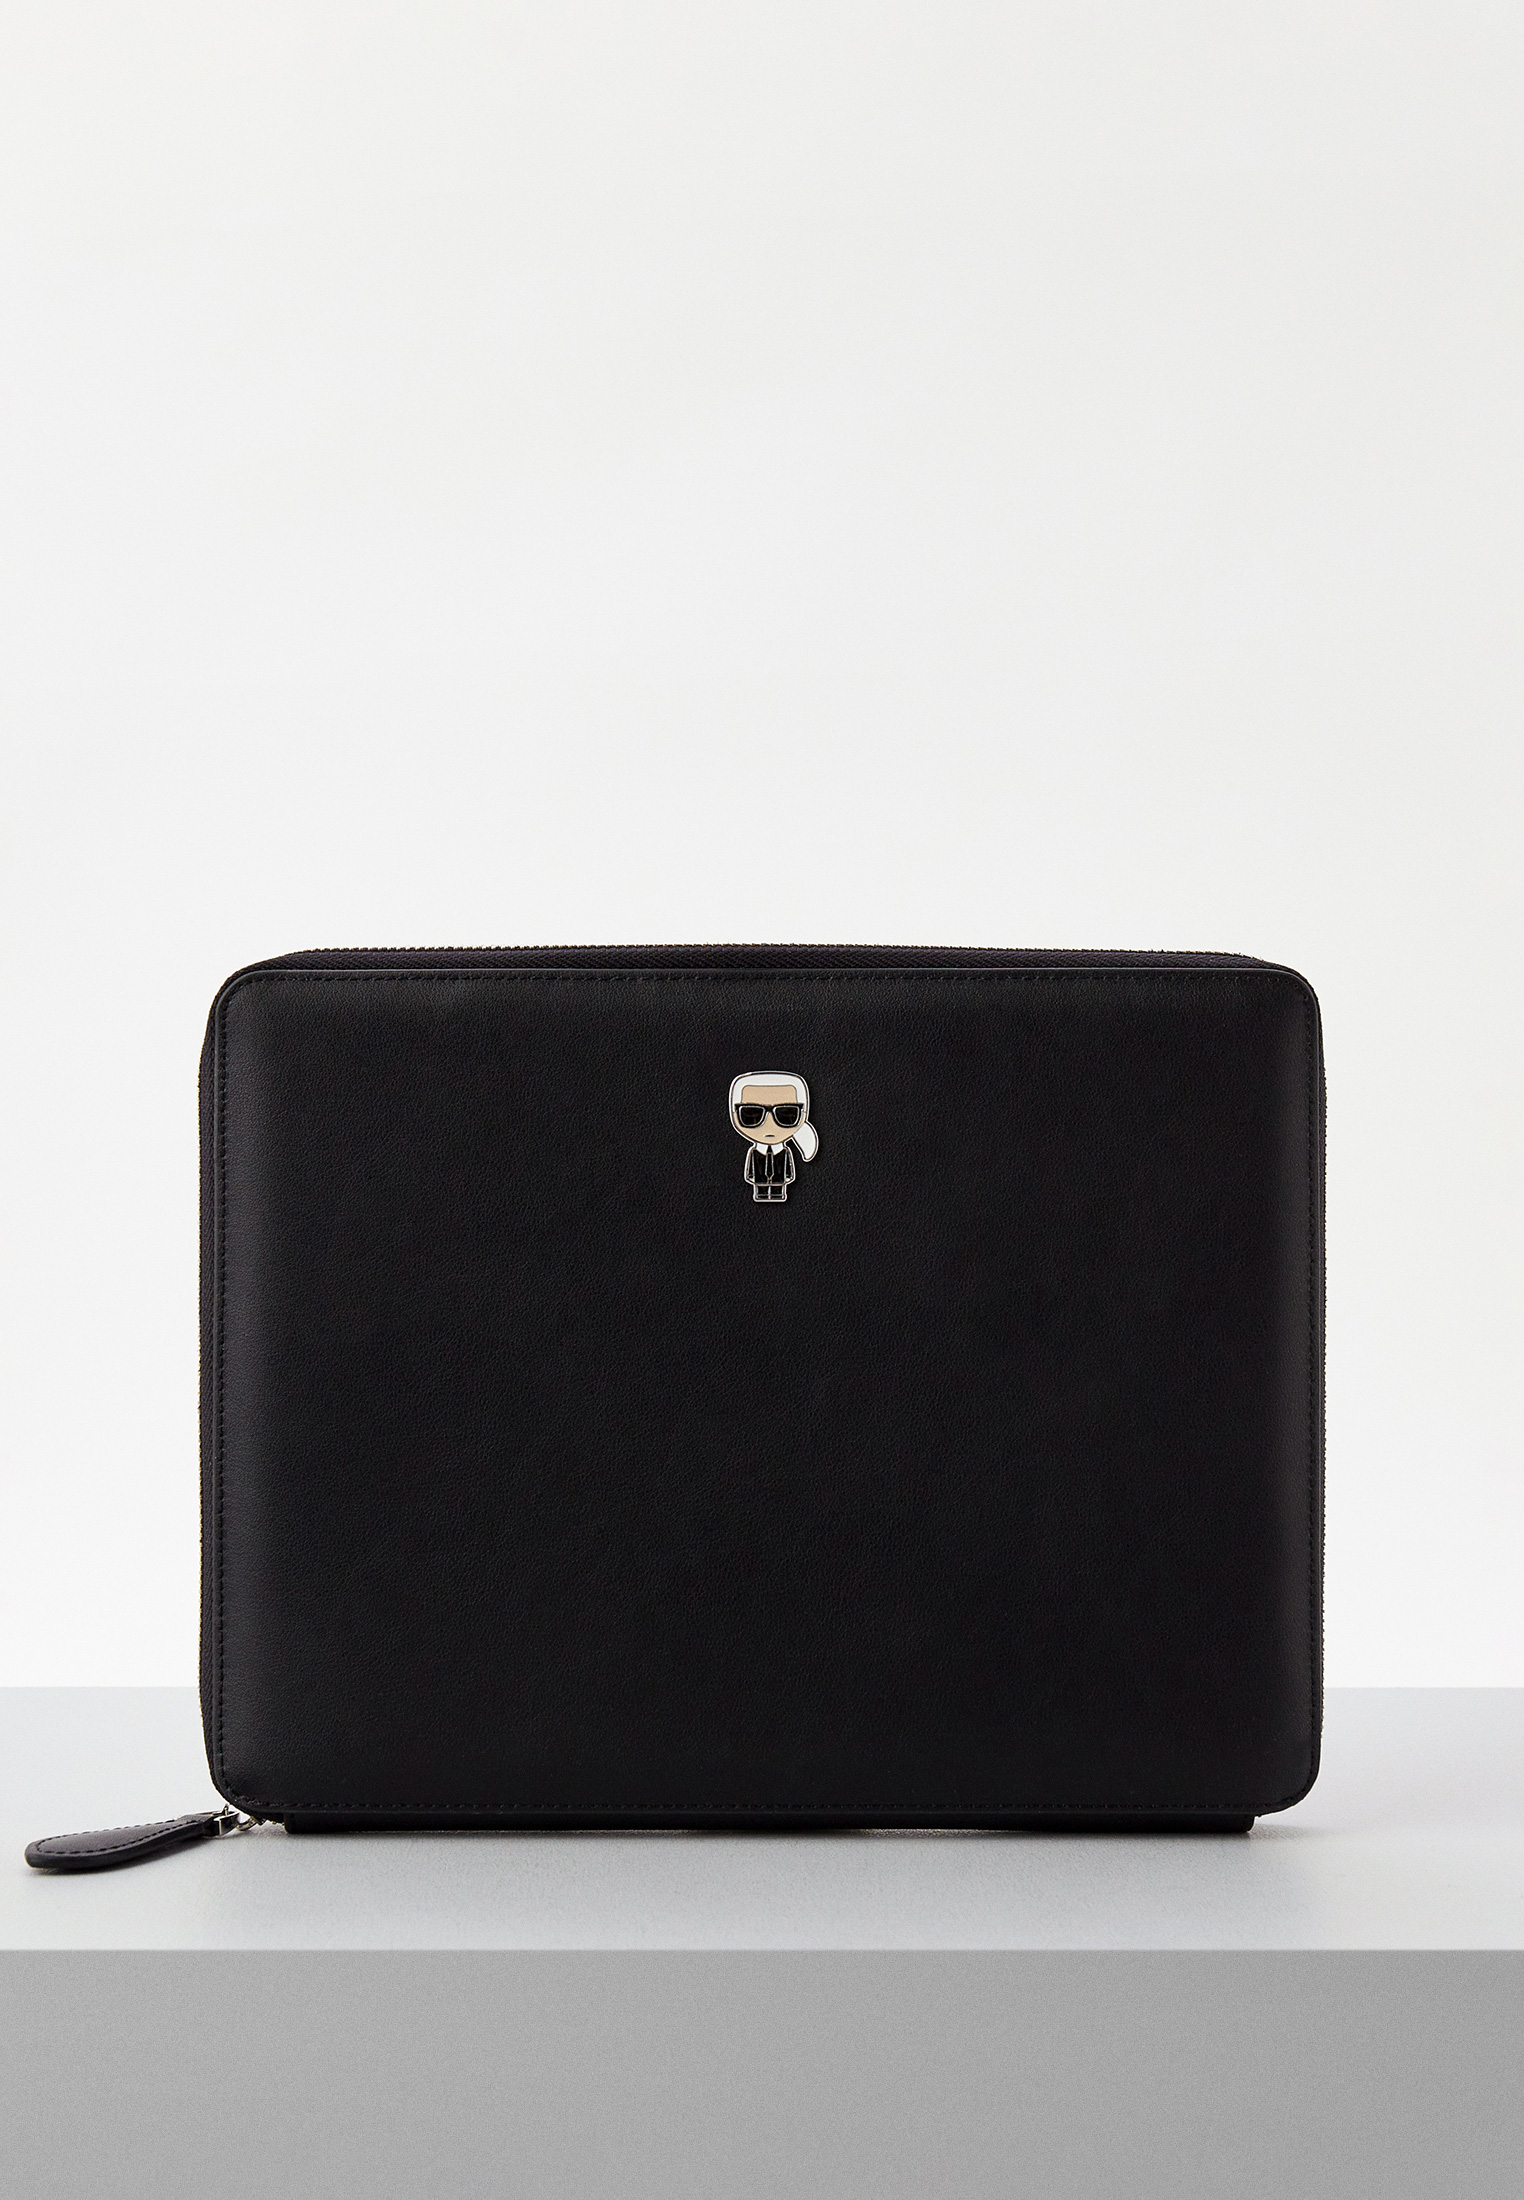 Чехол для iPad Karl Lagerfeld, цвет: черный, RTLACB047601 — купить в интернет-магазине Lamoda